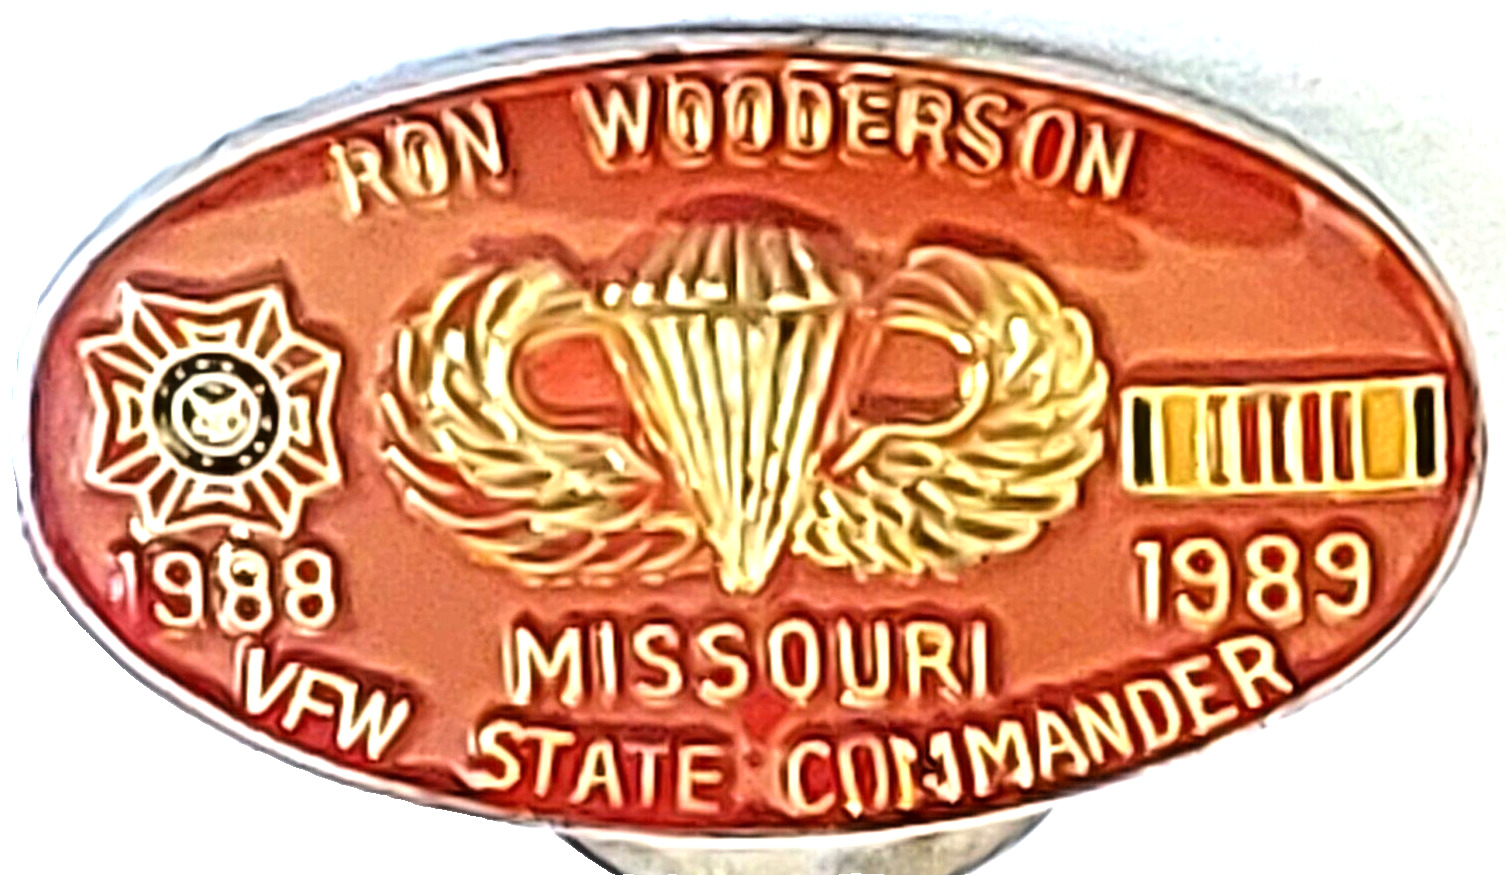 VFW Missouri State Commander 1988-1989 Ron Wooderson Lapel Pin